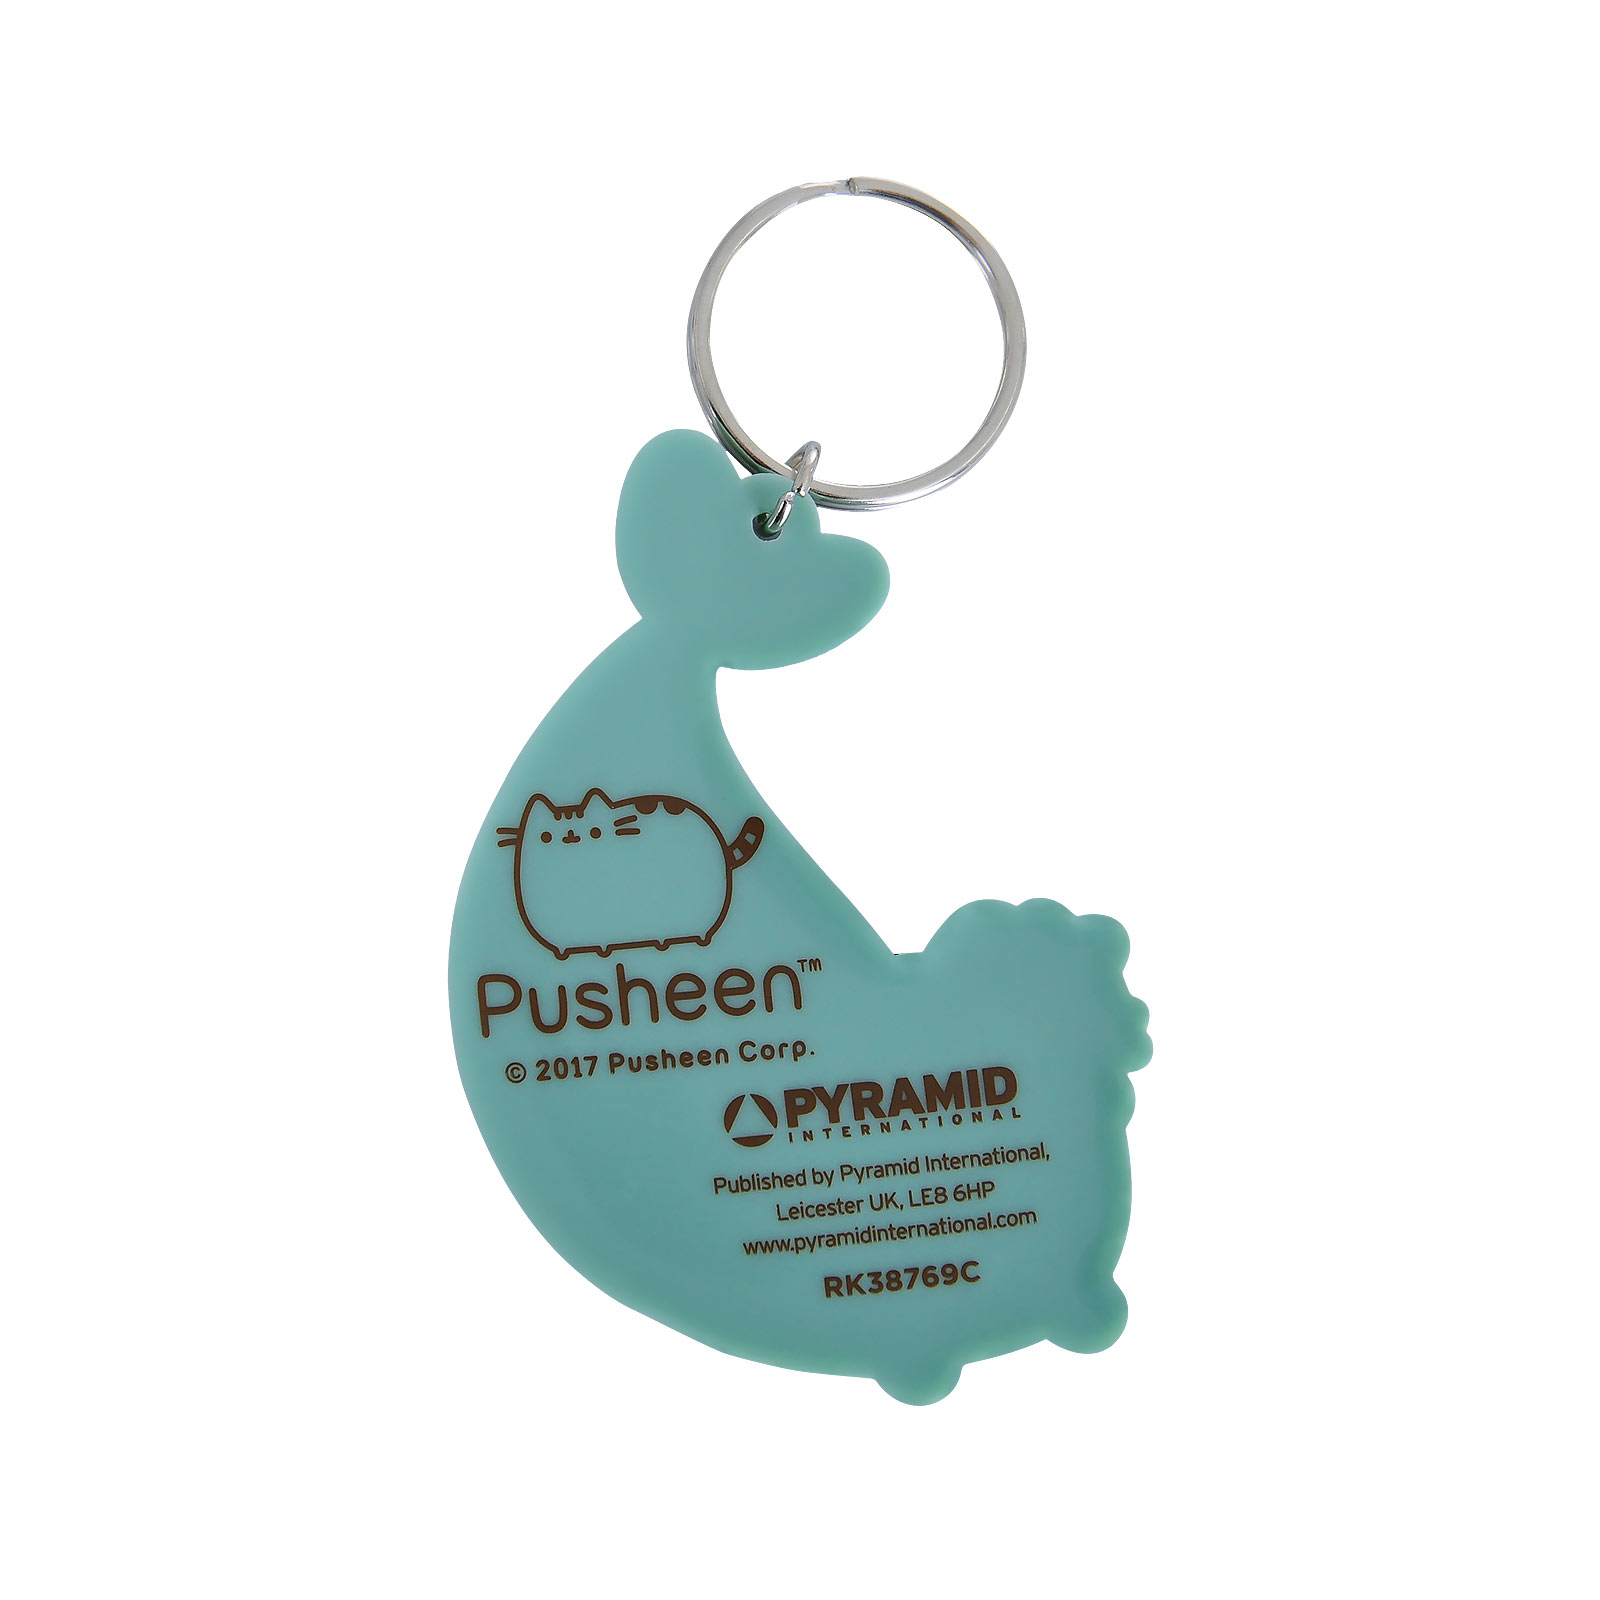 Pusheen - Purrmaid Keychain